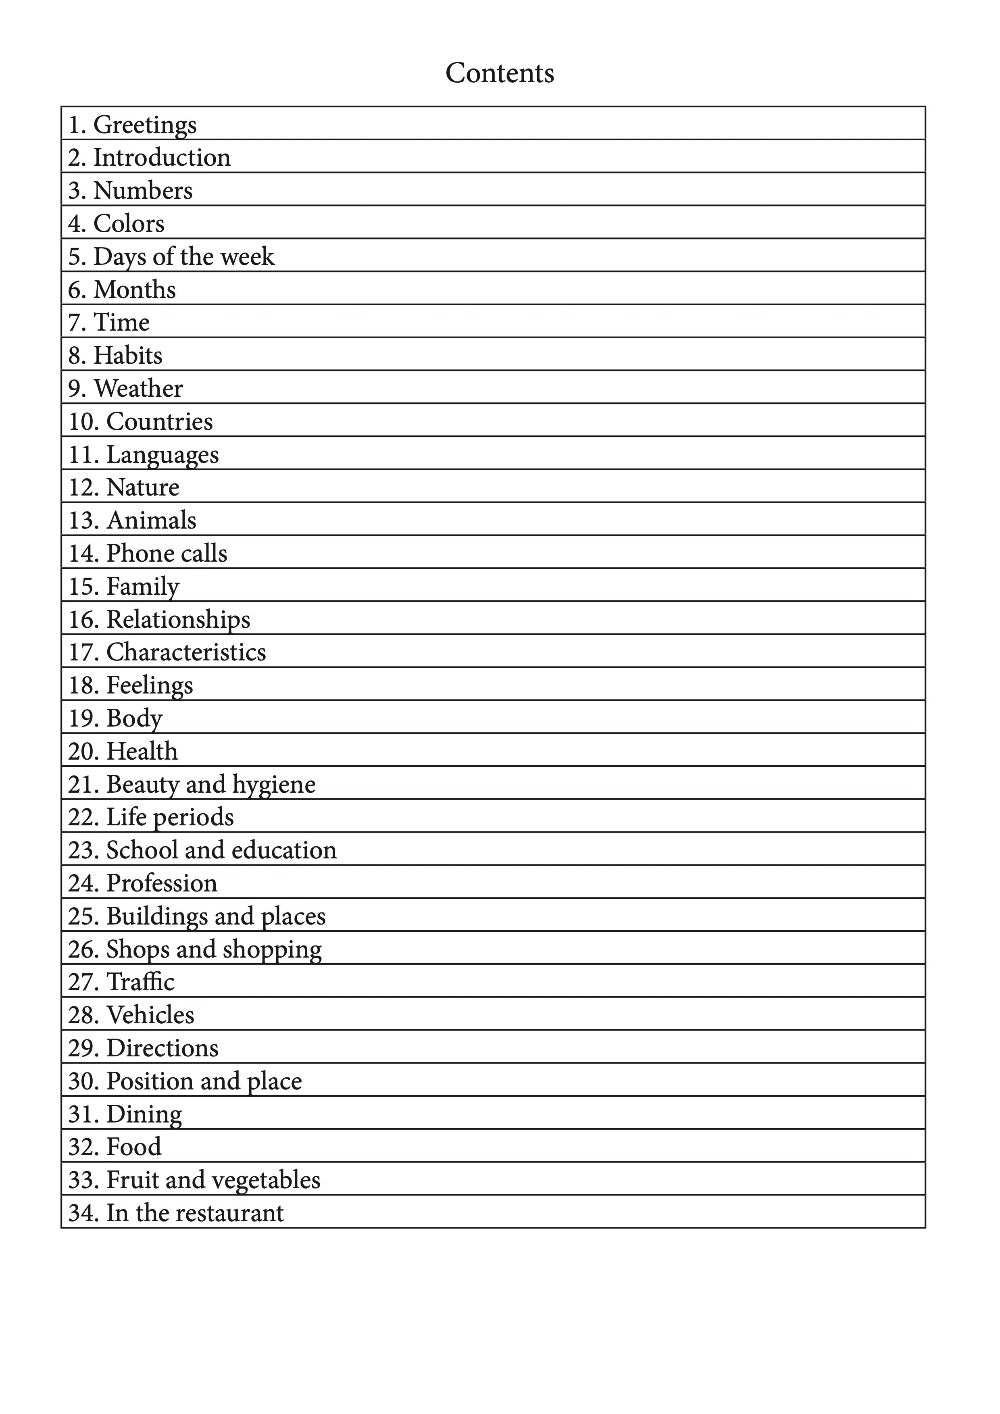 Umbundu language learning notebook contents page 1